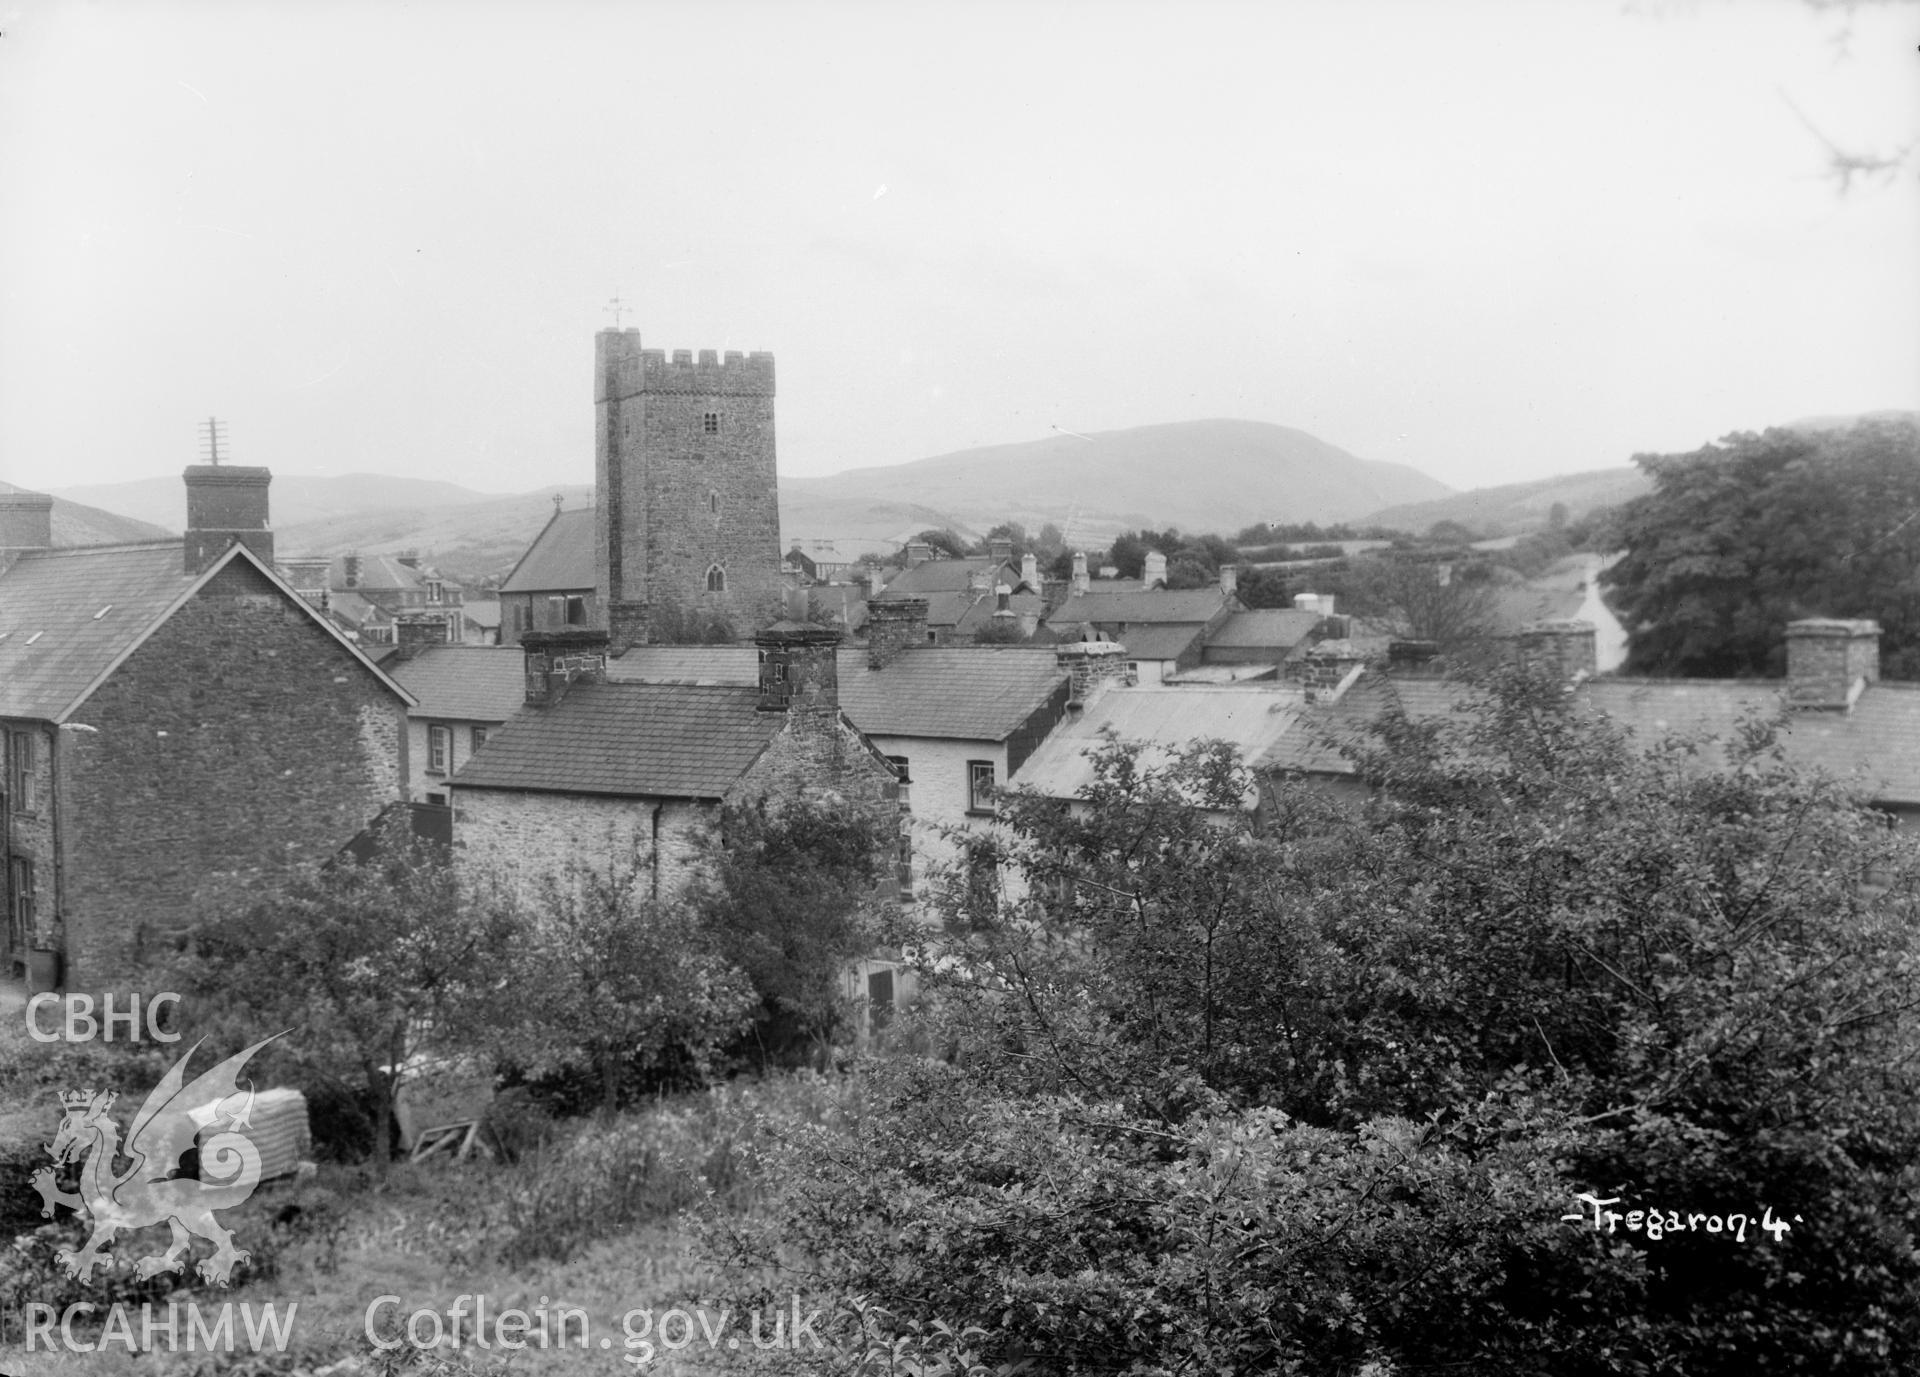 View of Tregaron taken by W A Call circa 1920.